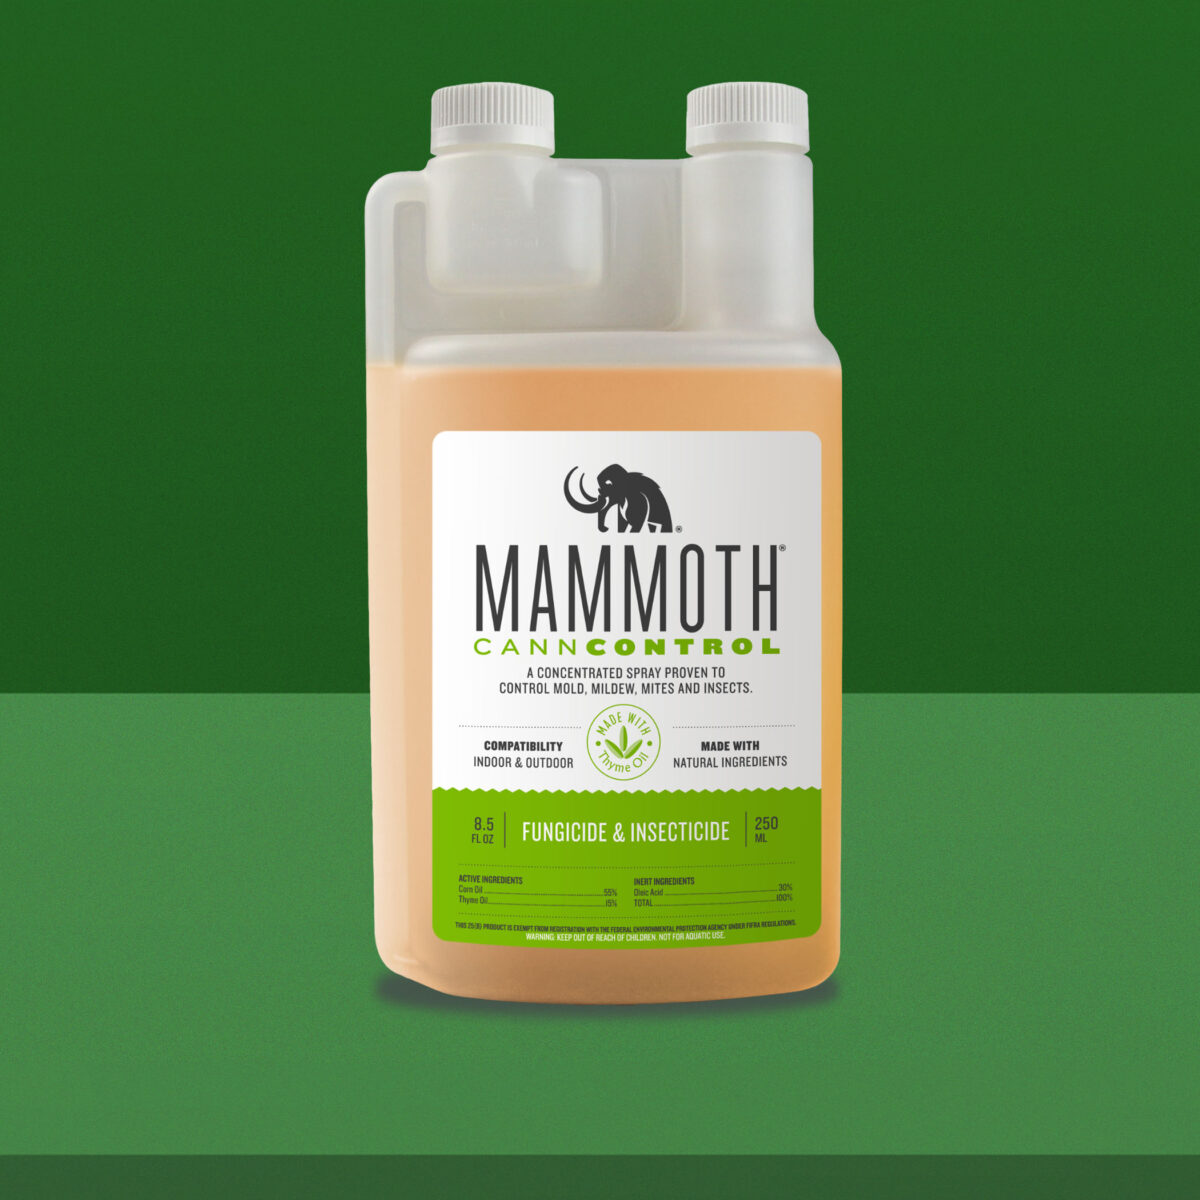 Mammoth CannControl 250mL Product Image